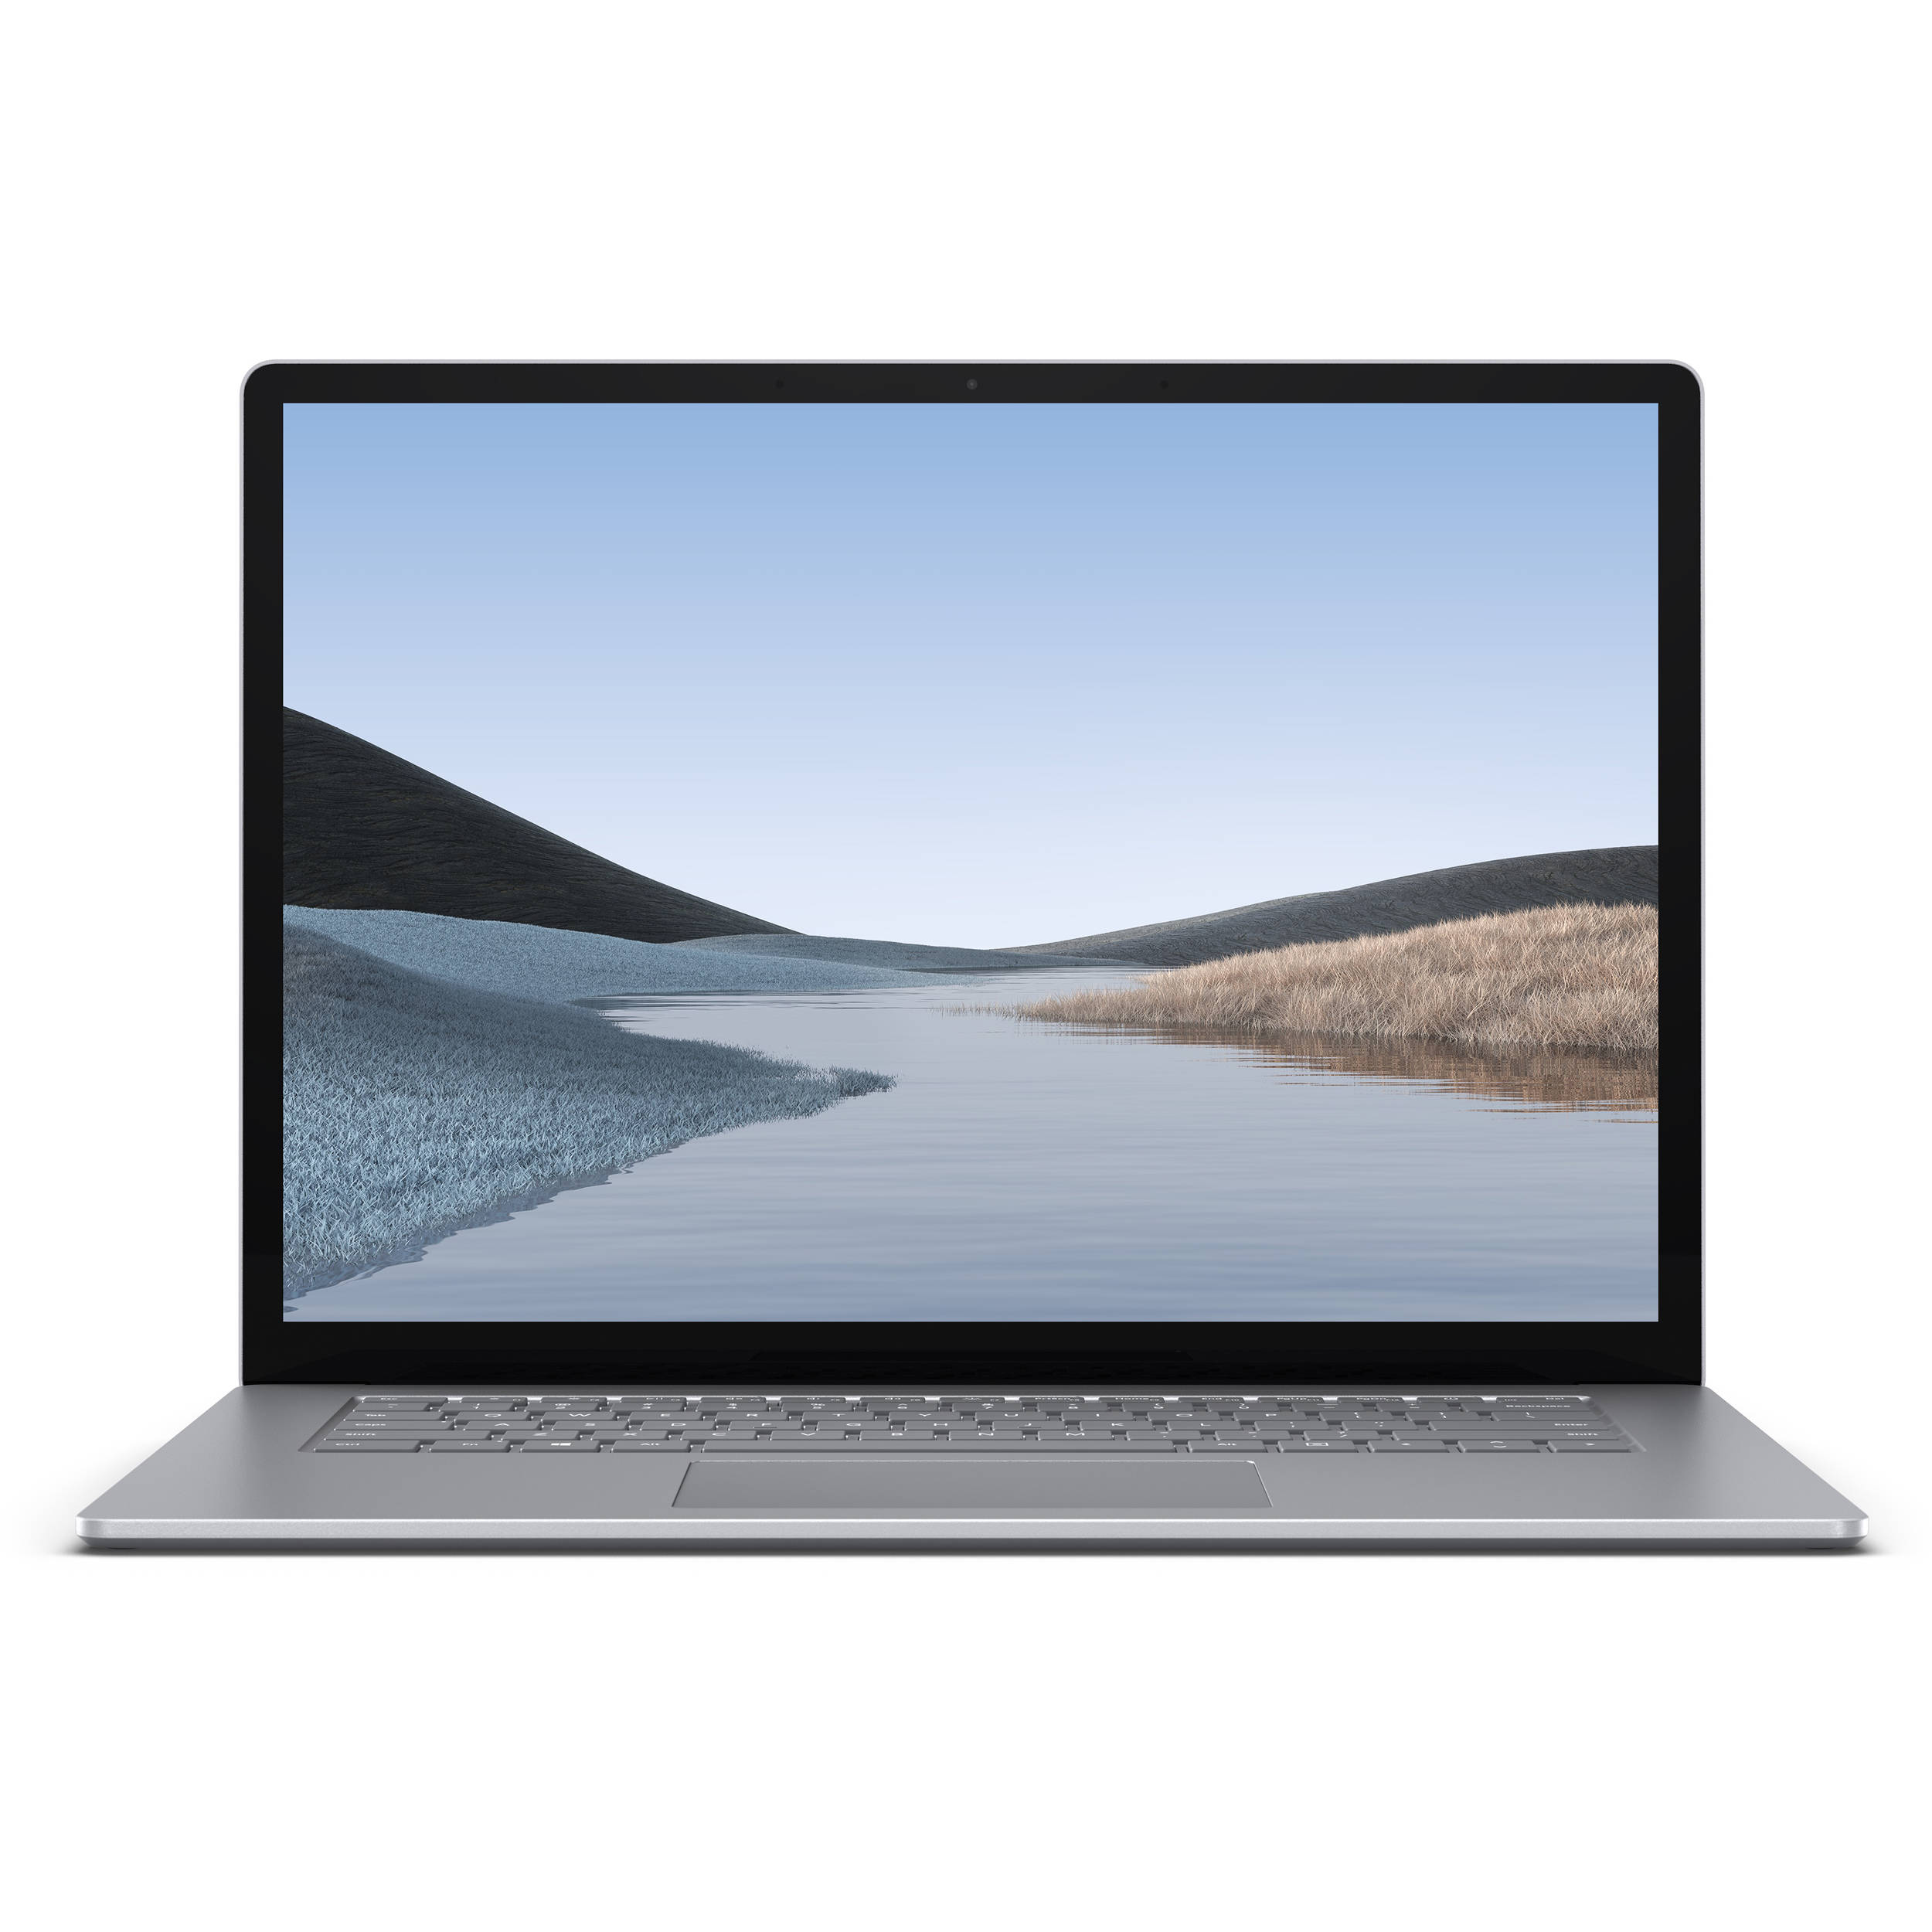  لپ تاپ 15 اینچی مایکروسافت مدل Surface Laptop 3 - A 